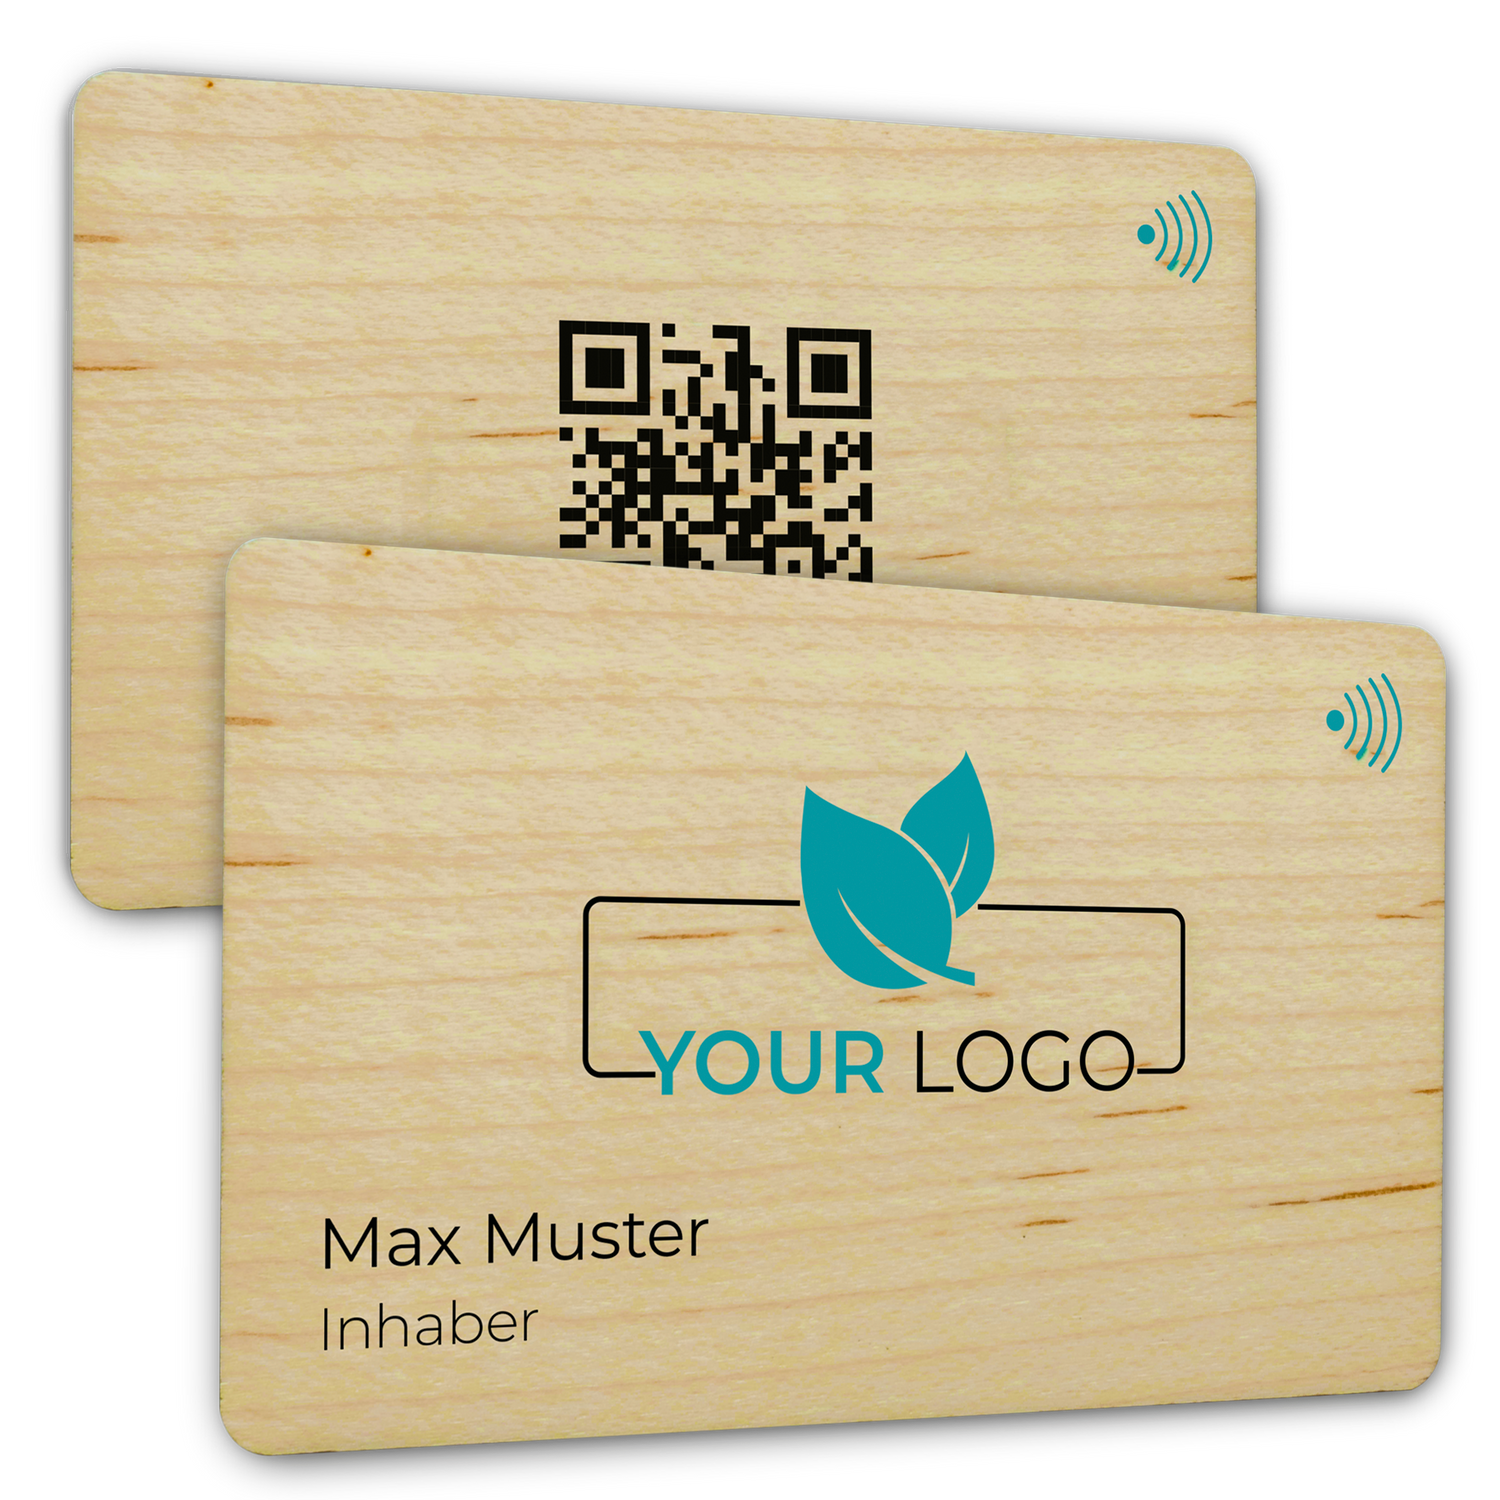 Personalizable wood visiting card - digital business card - NFC - QR code